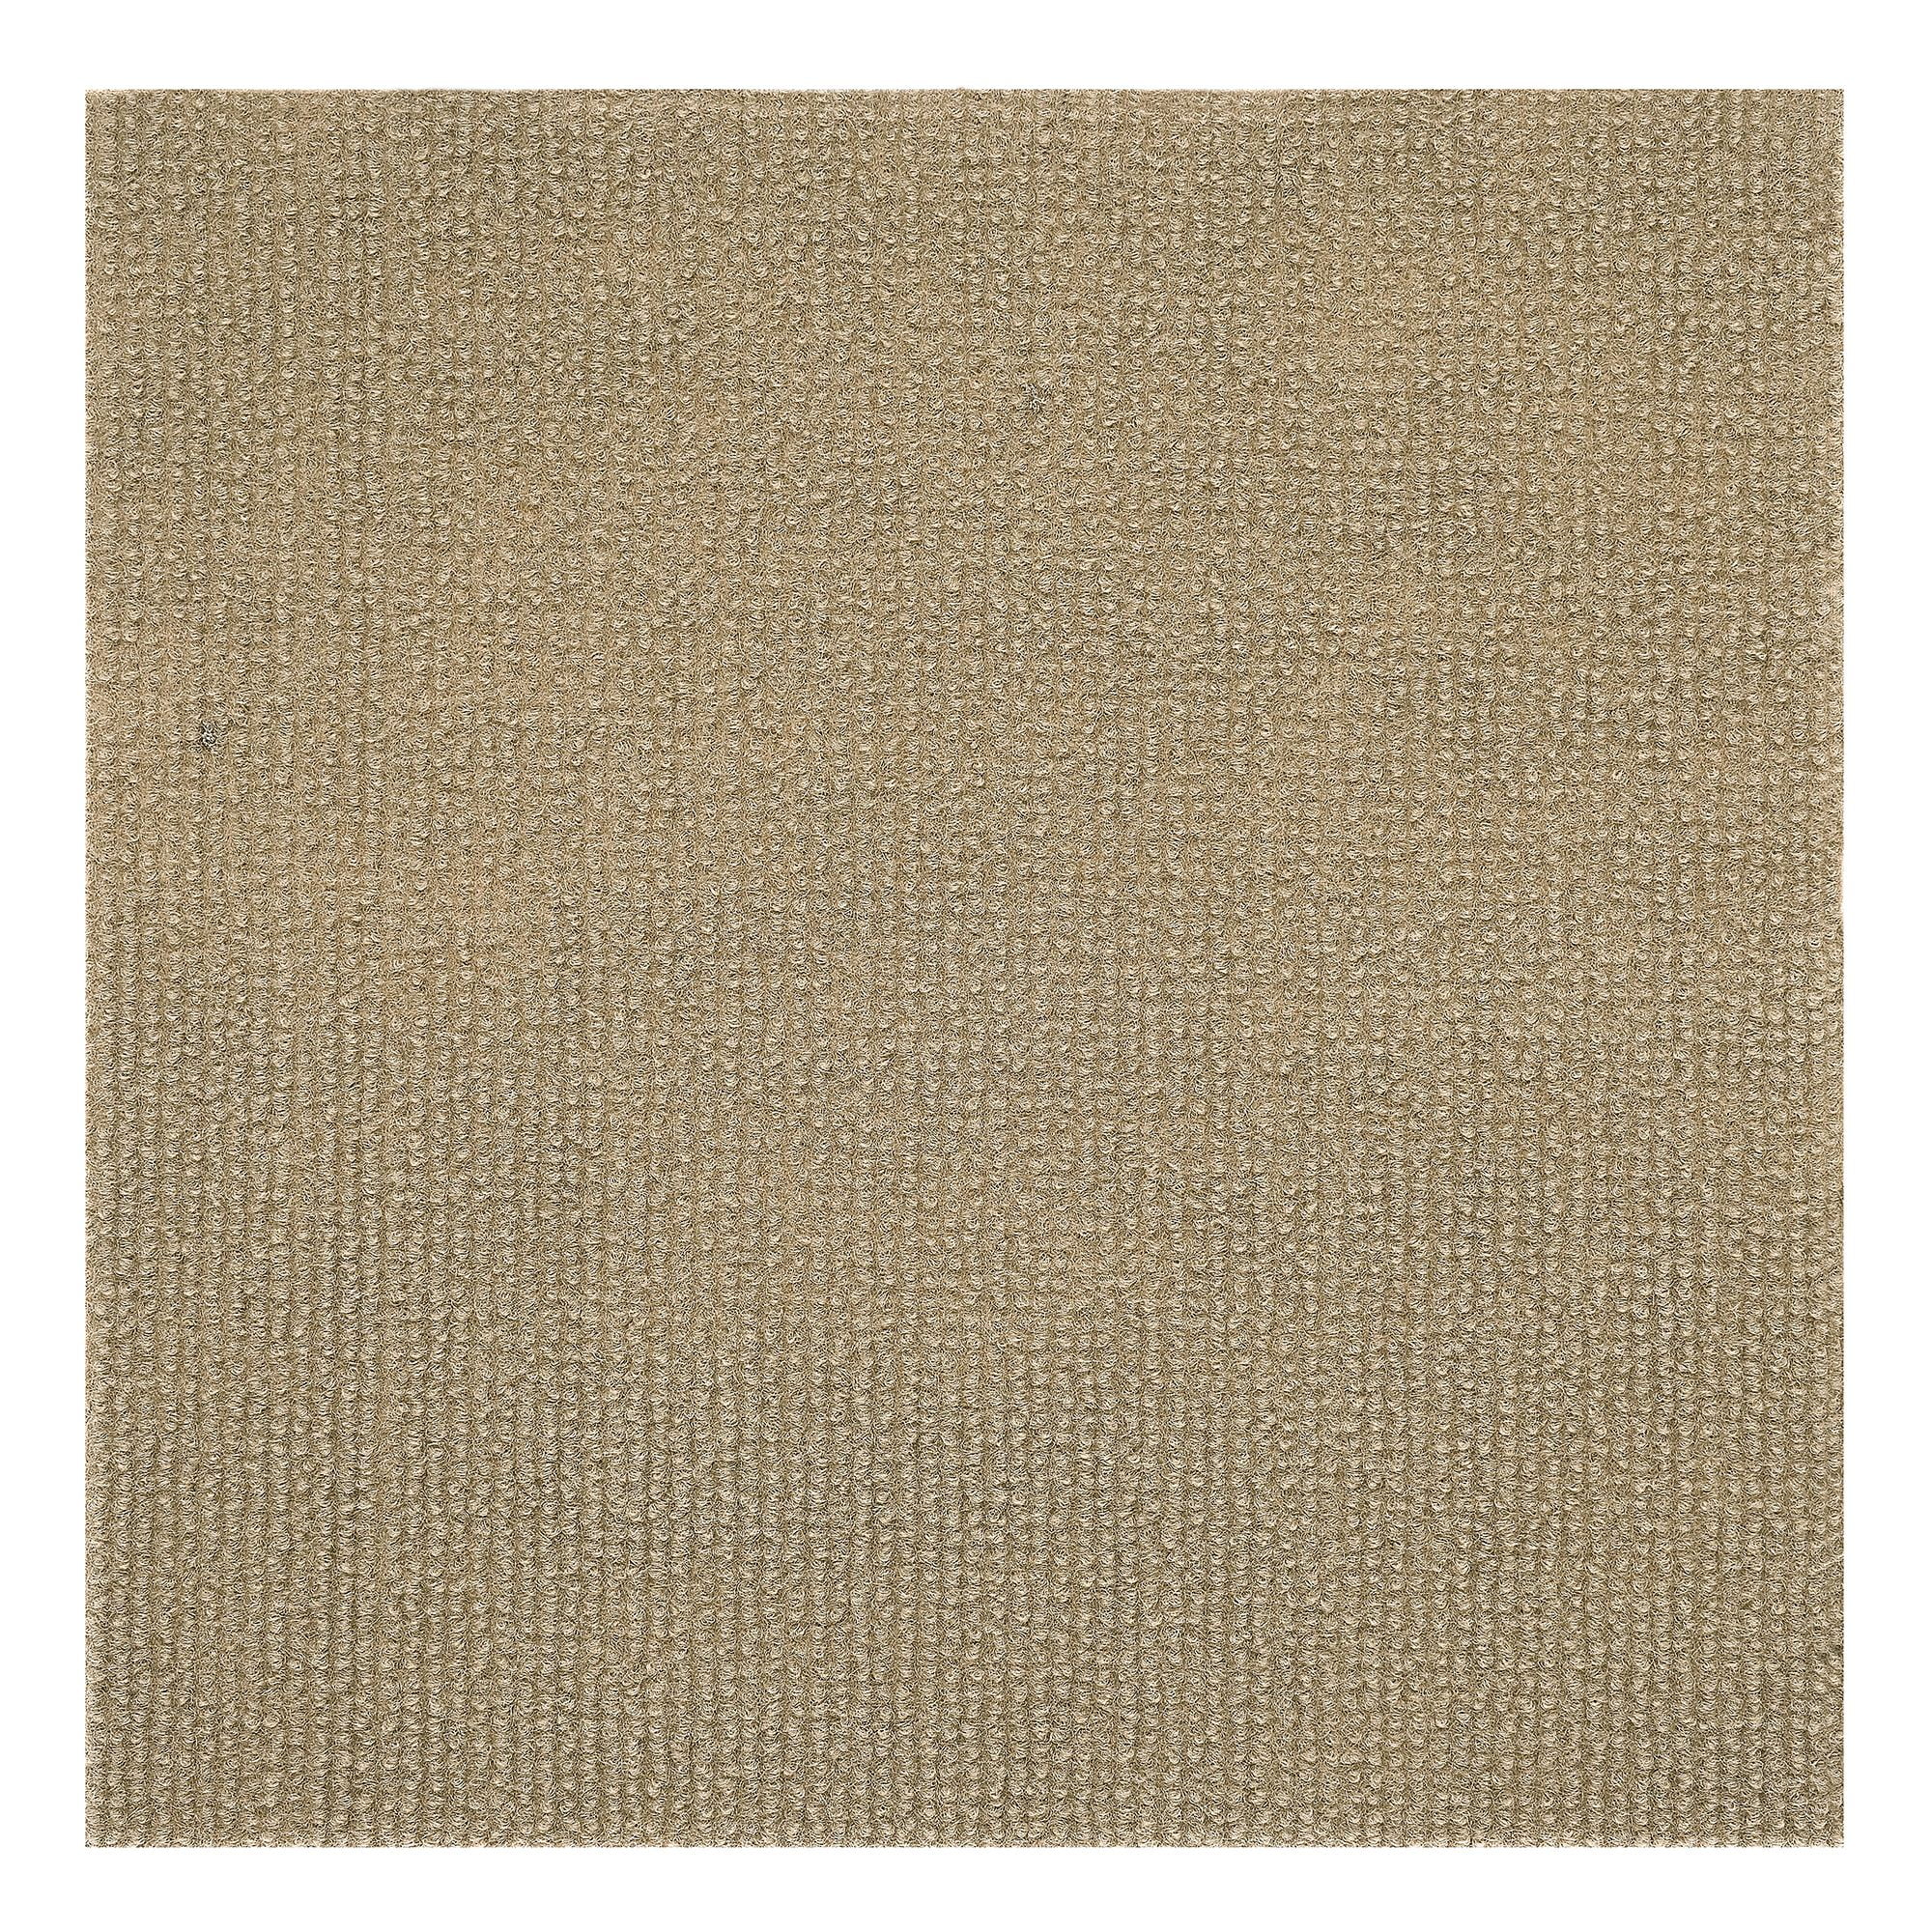 Carpet Tile Floor Mat 12x12'' Squares Peel And Stick Adhesive Outdoor Indoor 